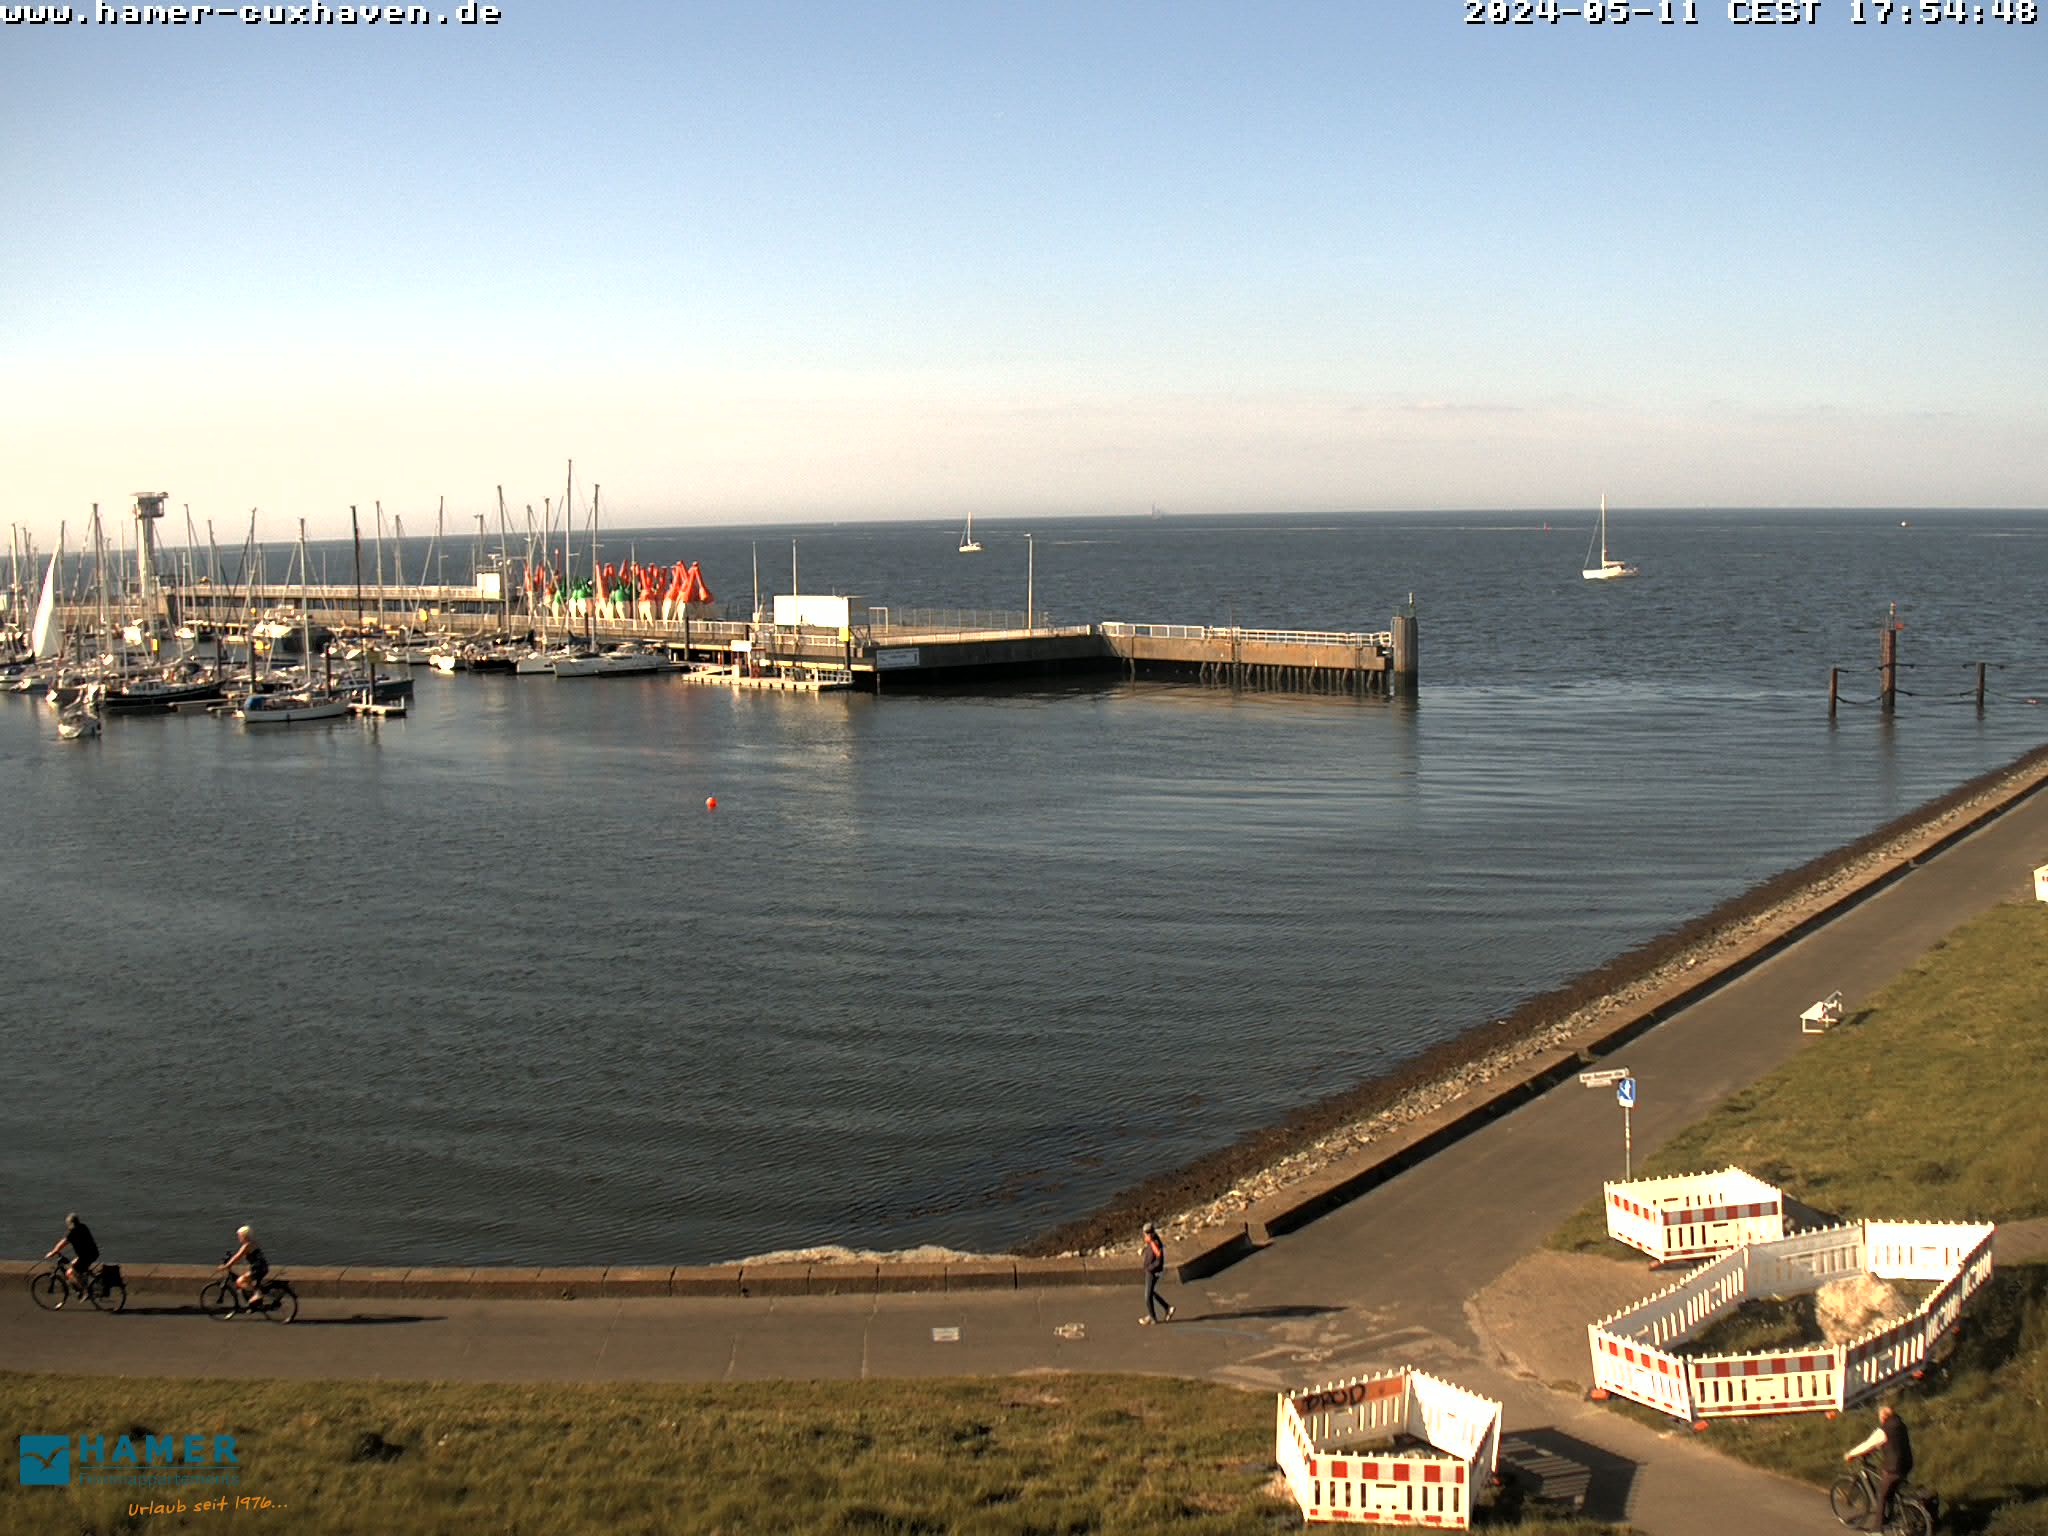 Cuxhaven Mer. 17:55